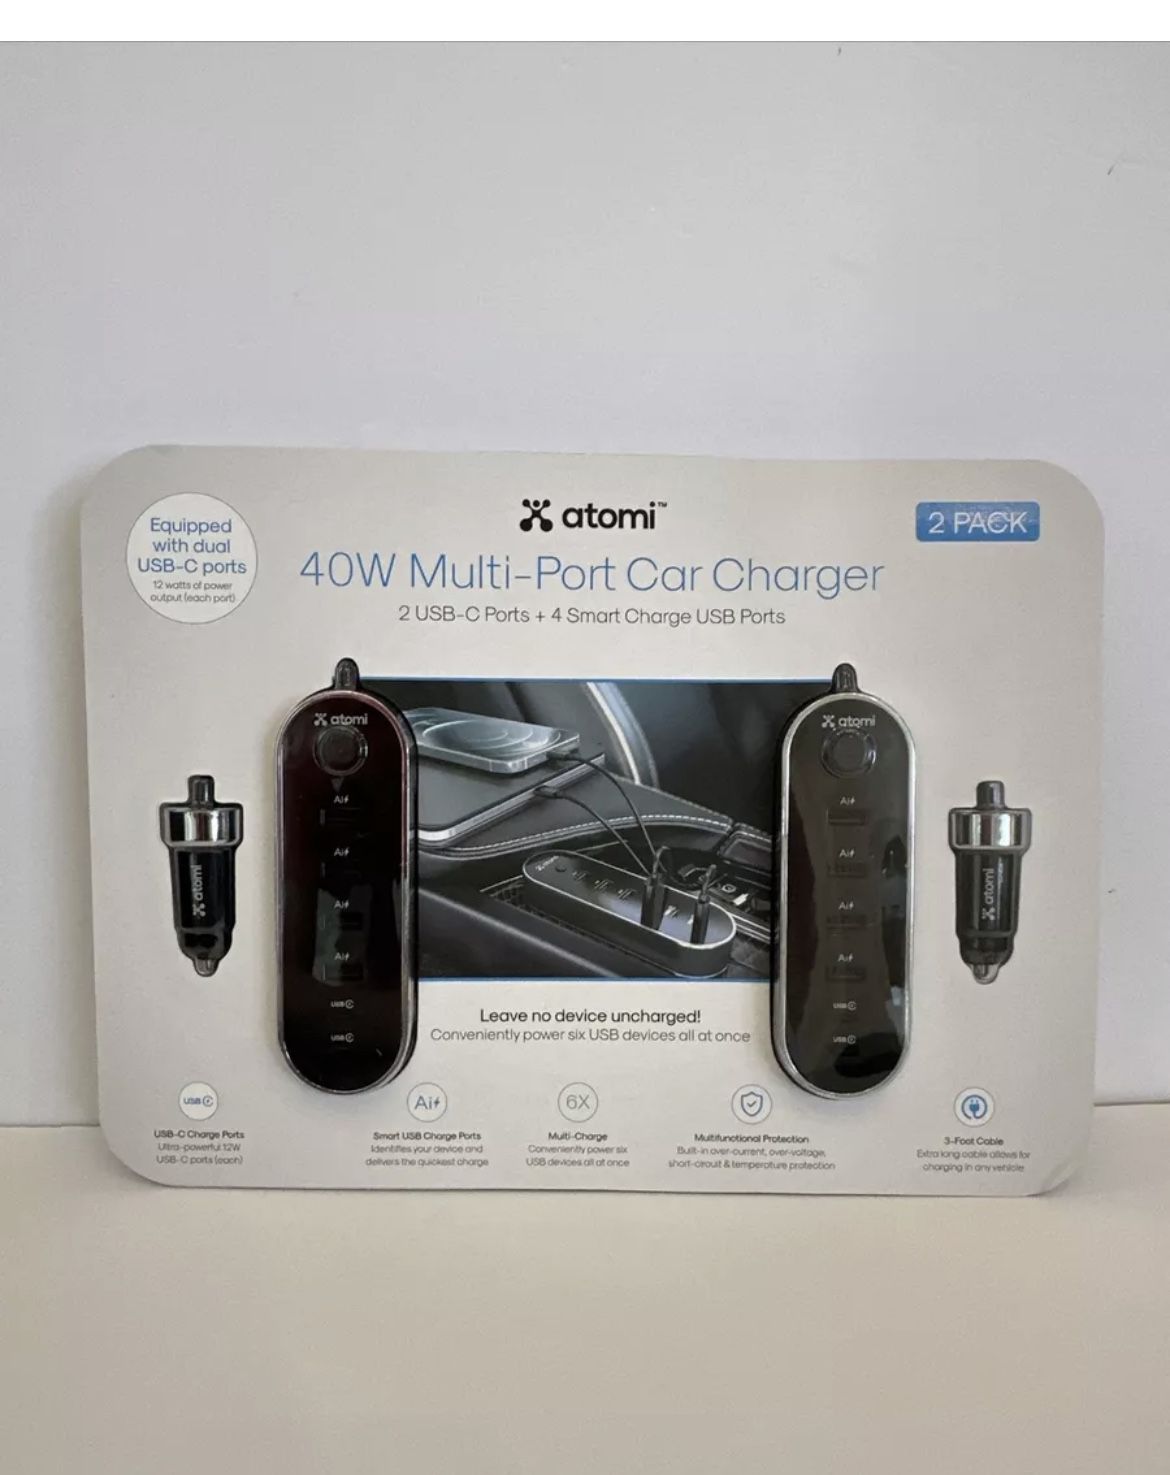 2 PACK Atomi 40W Multi-Port Car Charger 2 USB-C Ports + 4 Smart USB Ports